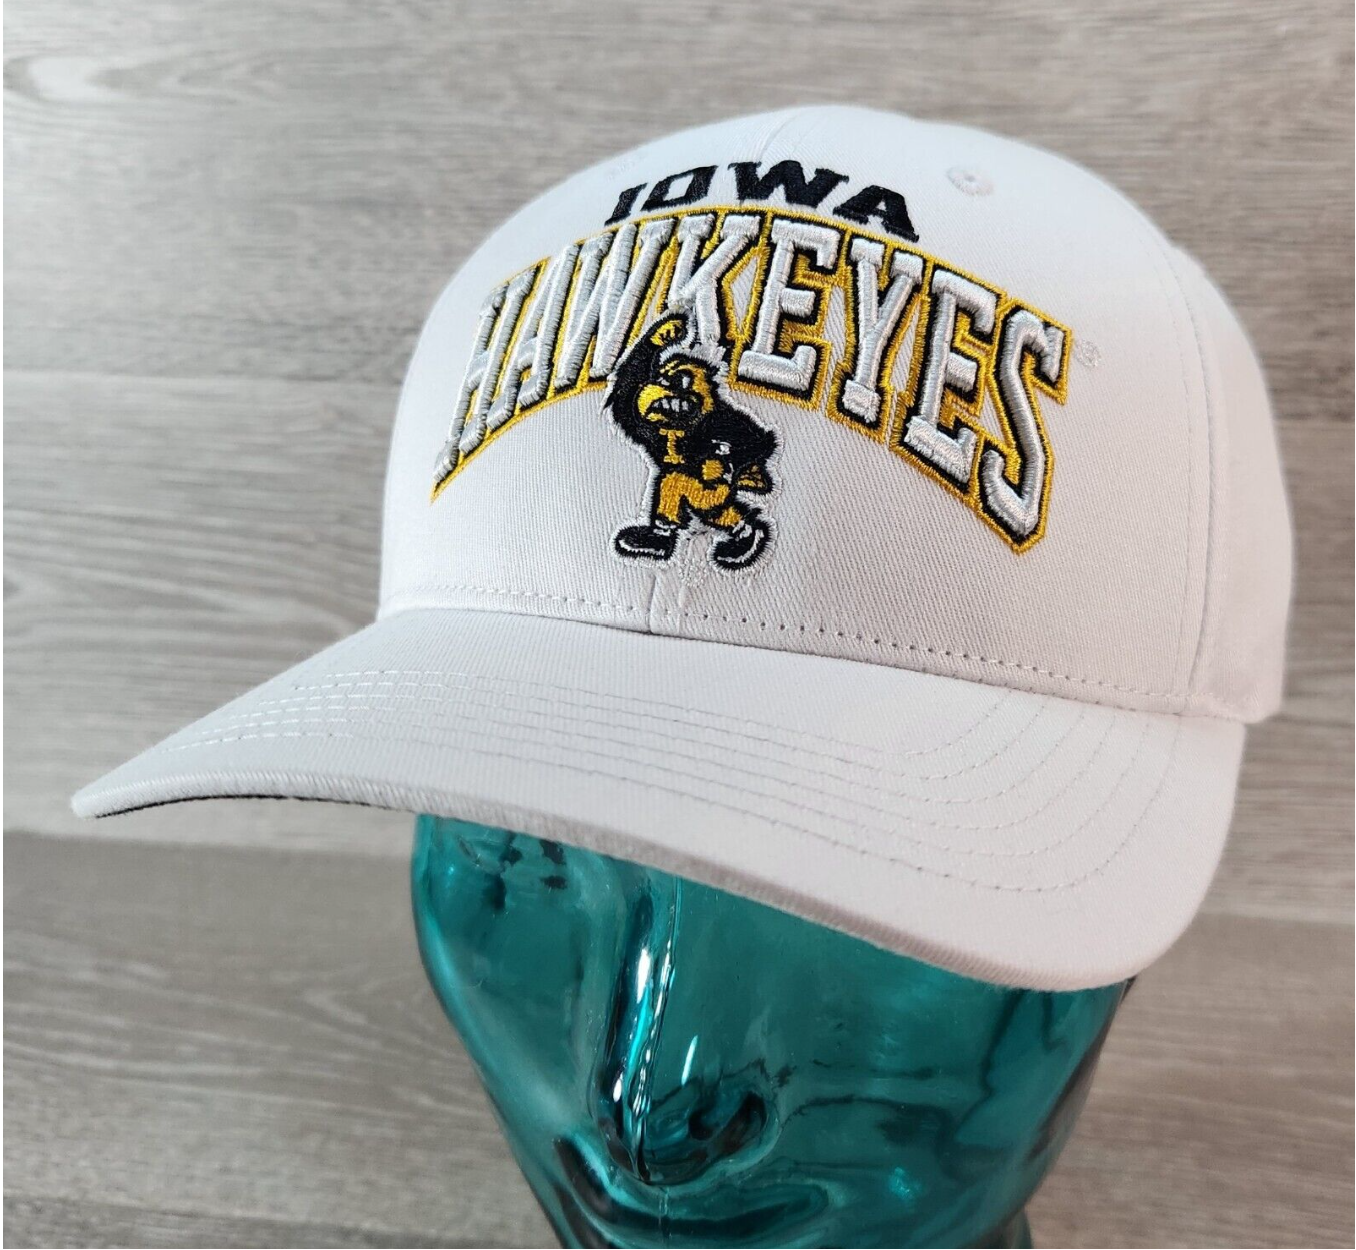 Iowa Hawkeye Retro Style White Snap Back Cap Hat by Captivating